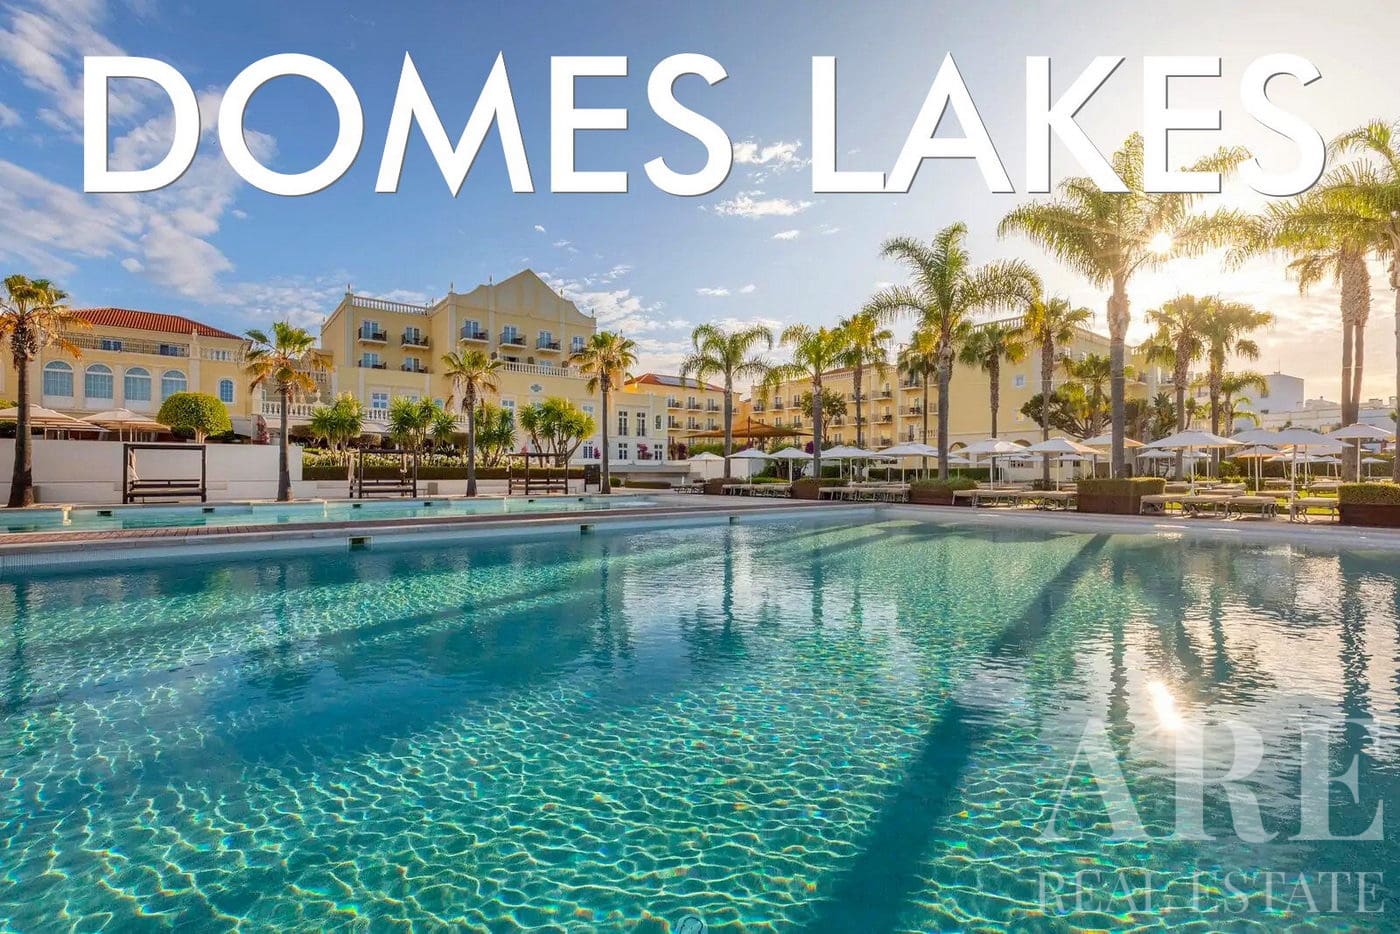 Domes Lake condominium presentation